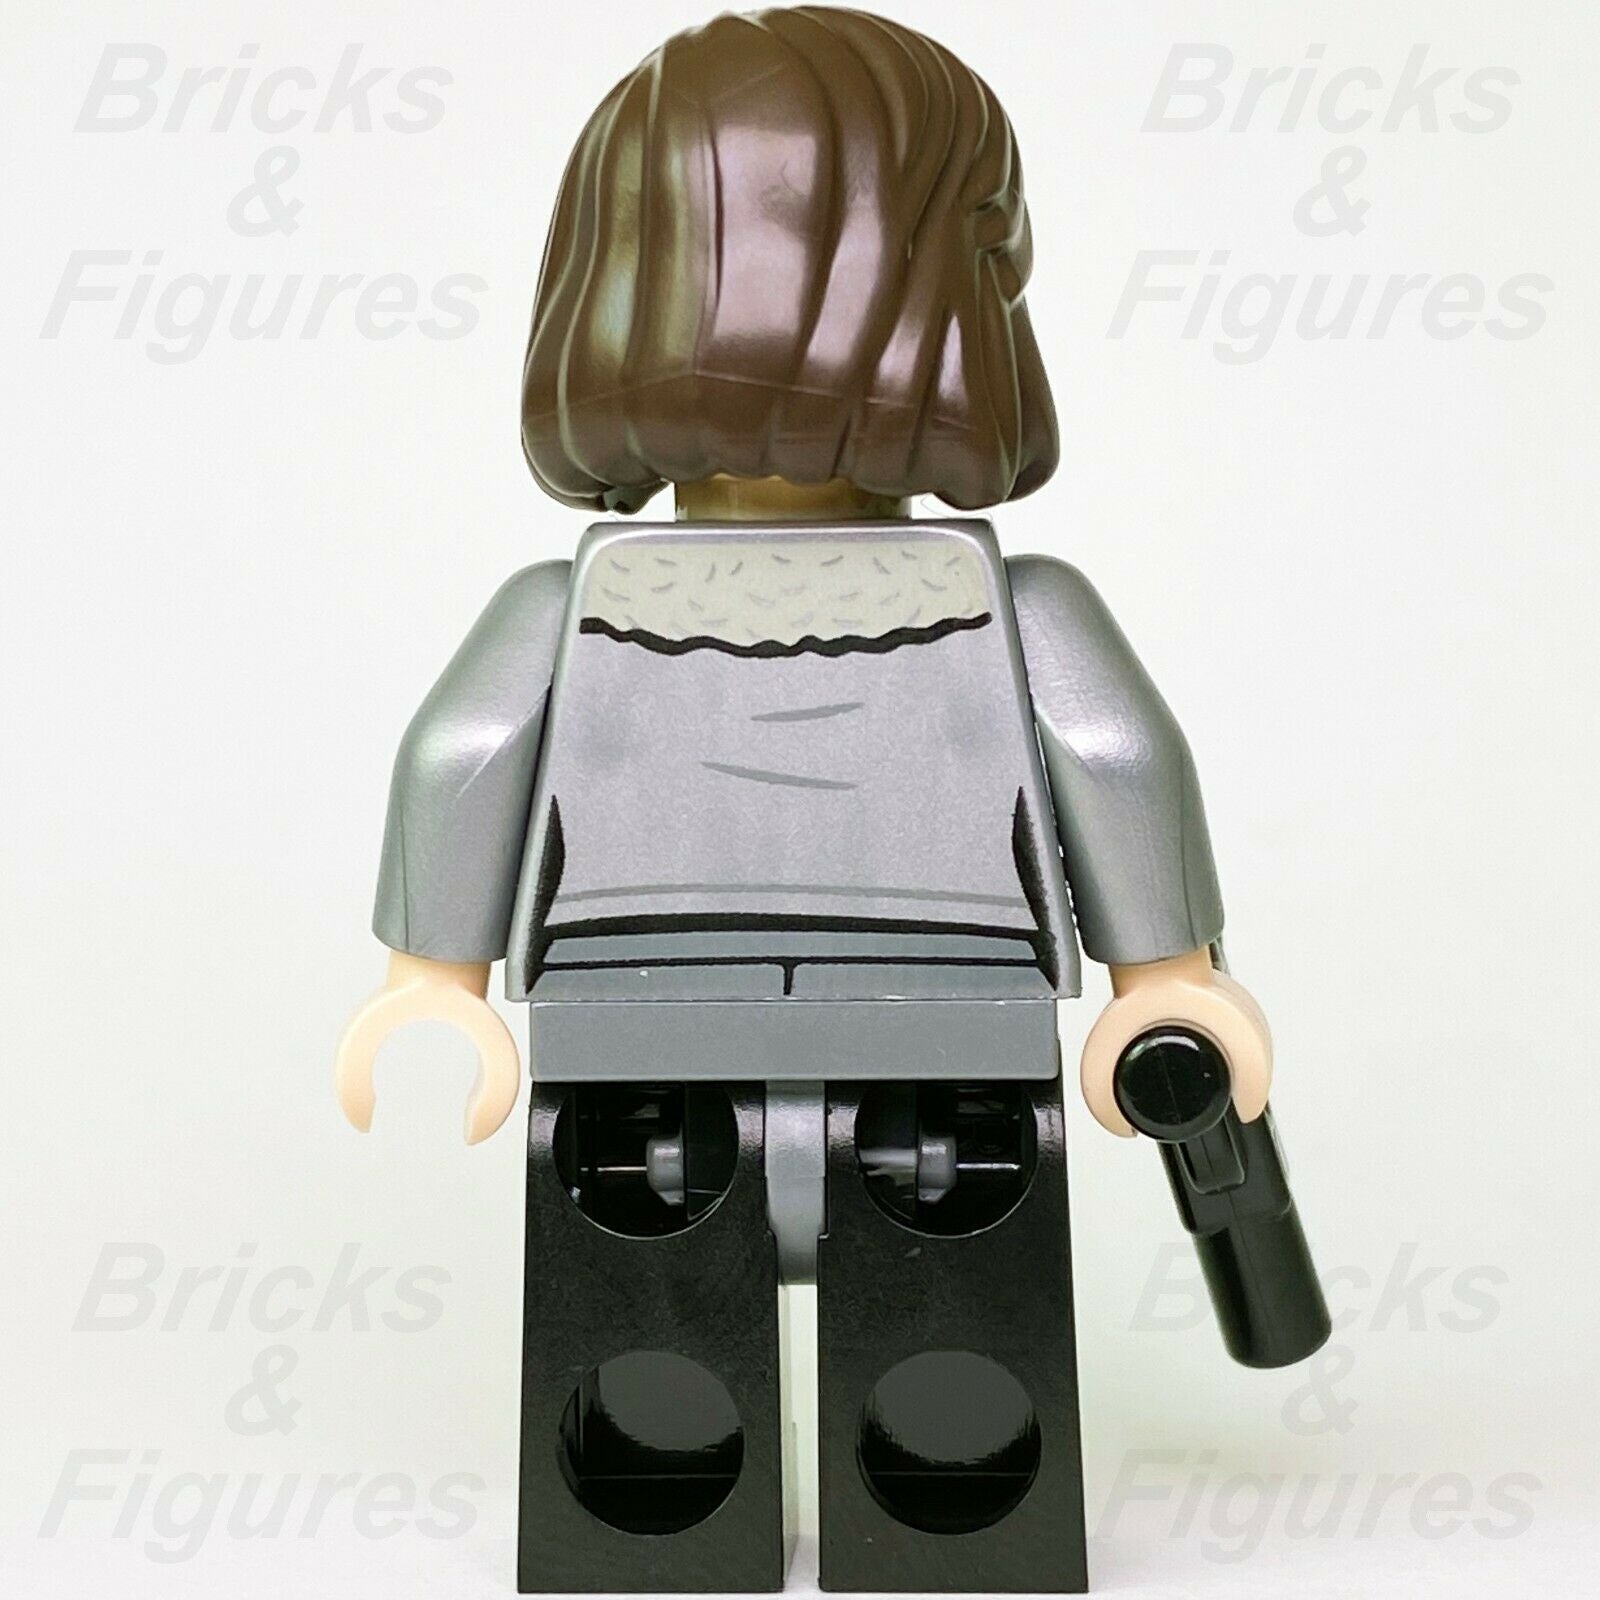 New Star Wars LEGO Qi'ra Corellia Outfit Solo Movie Minifigure 75209 - Bricks & Figures